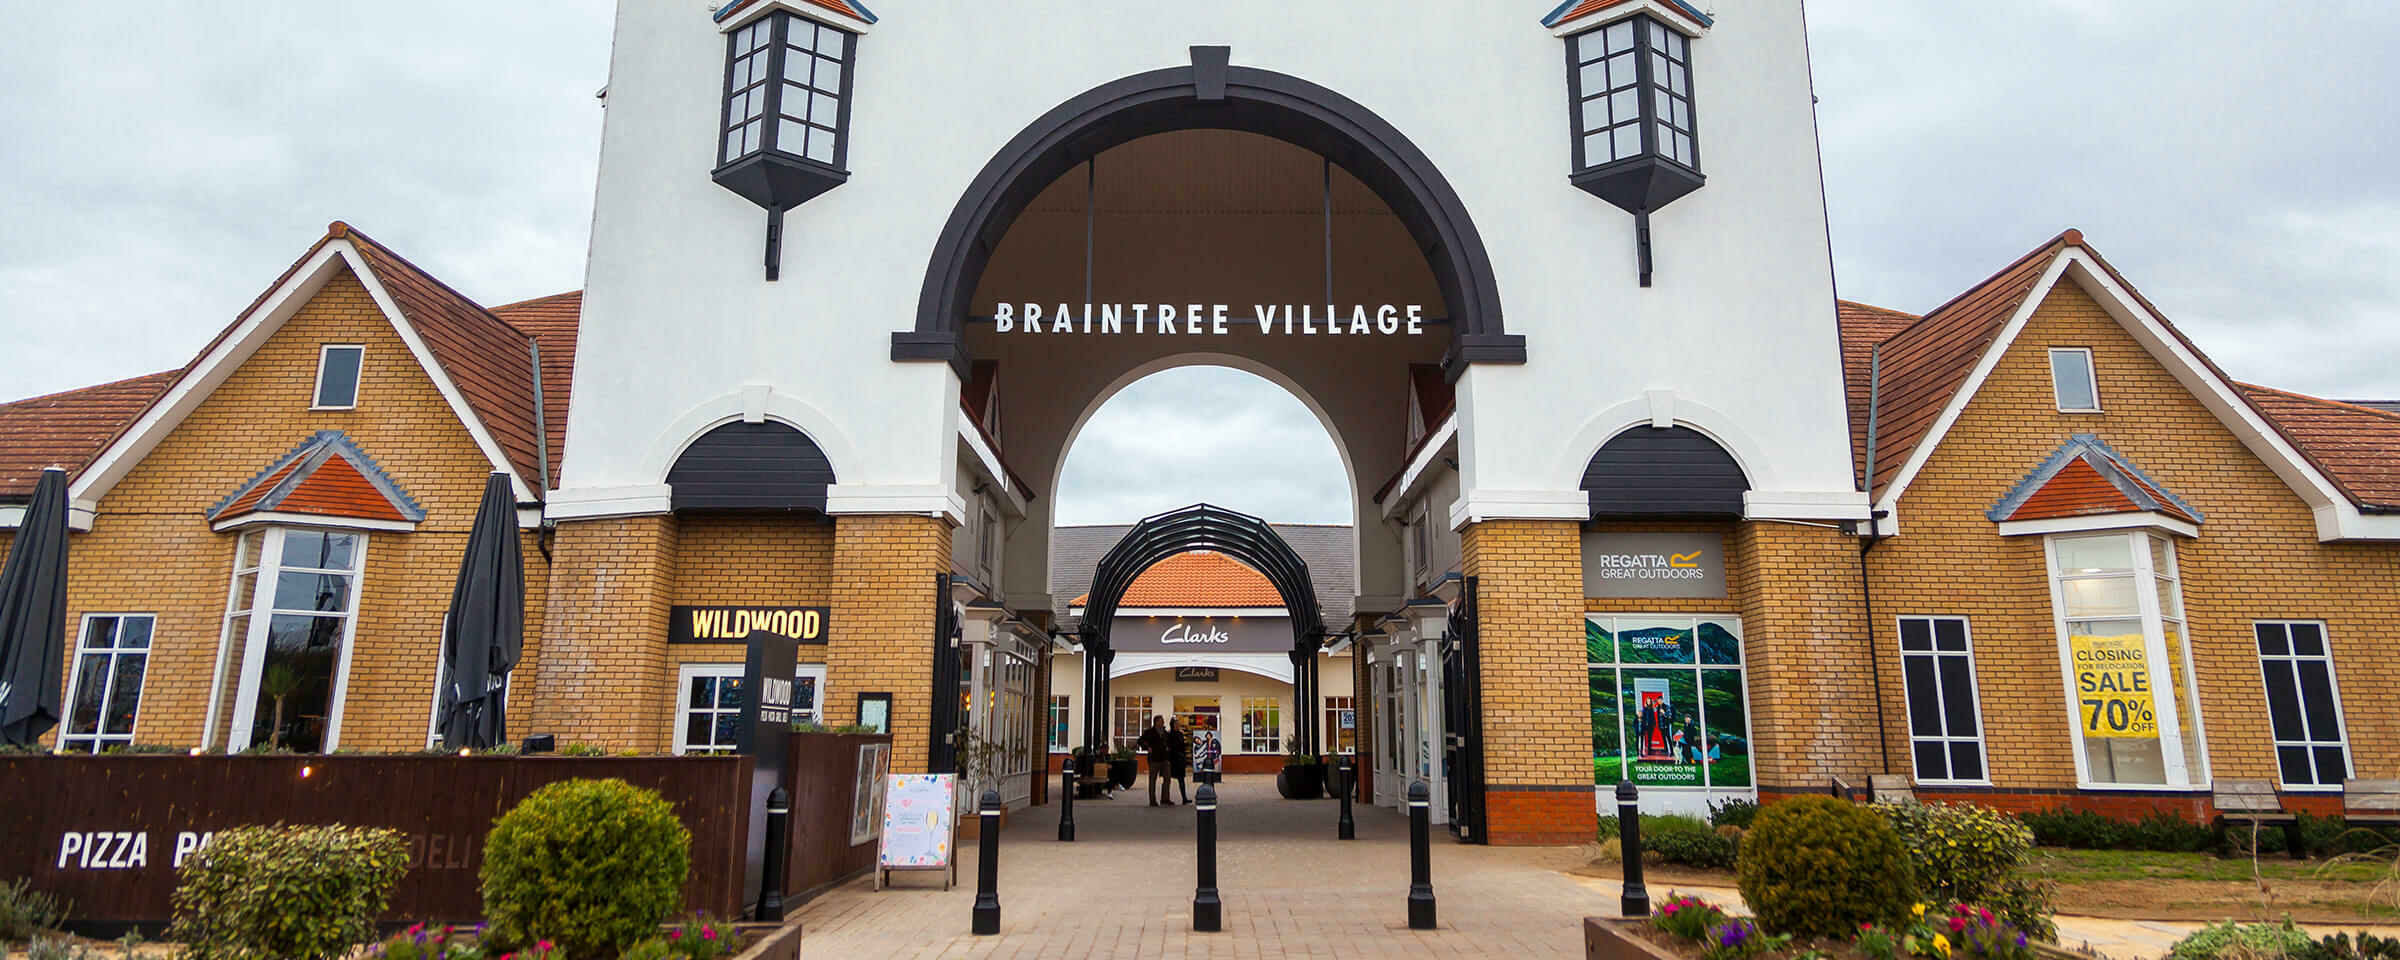 Braintree Village Shopping Centre - Living in Essex Lifestyle